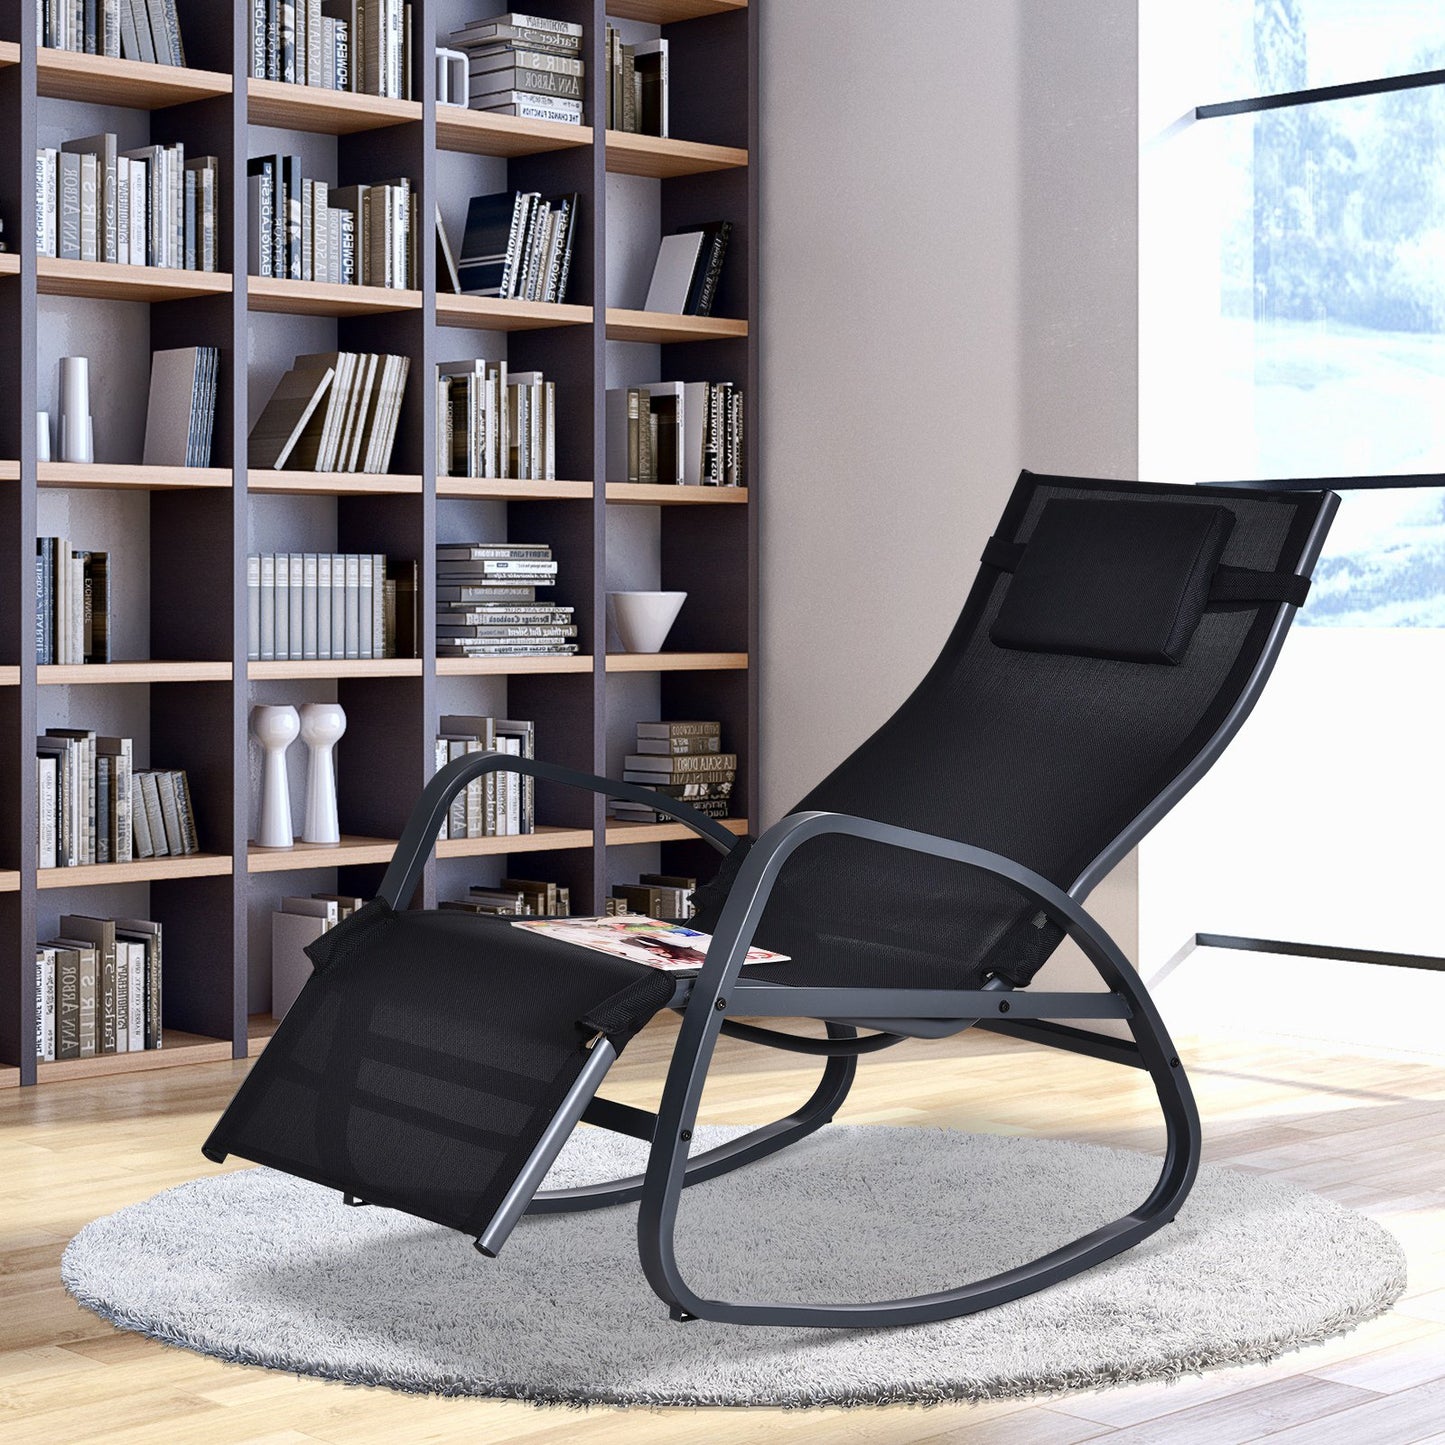 Outsunny Metal Frame Zero Gravity Rocking Patio Chair w/ Pillow Black